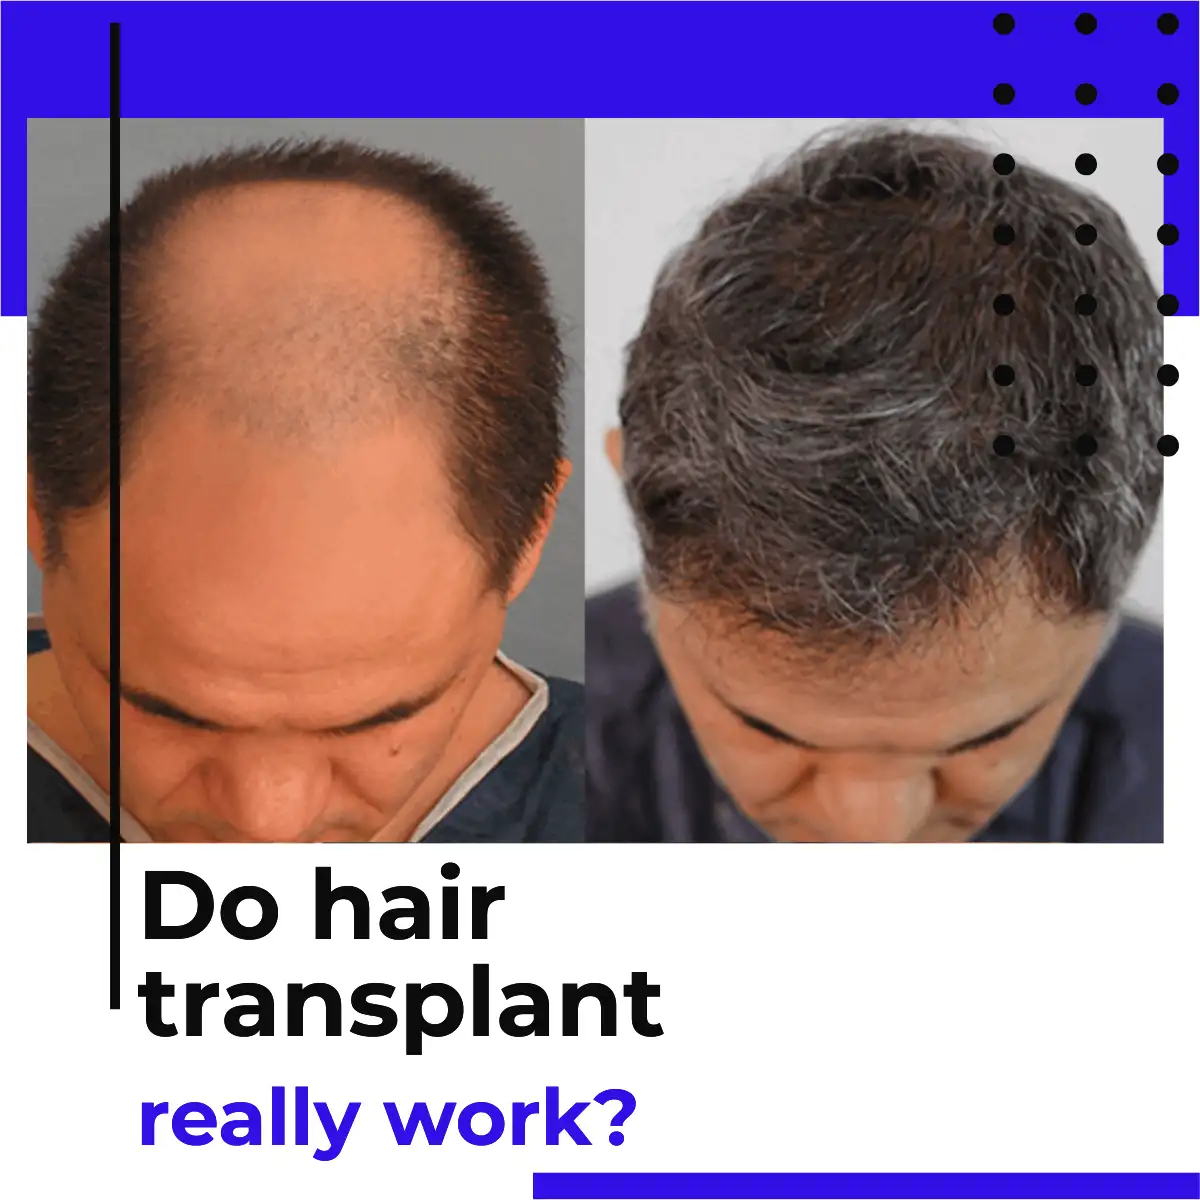 do hair transplants really work?